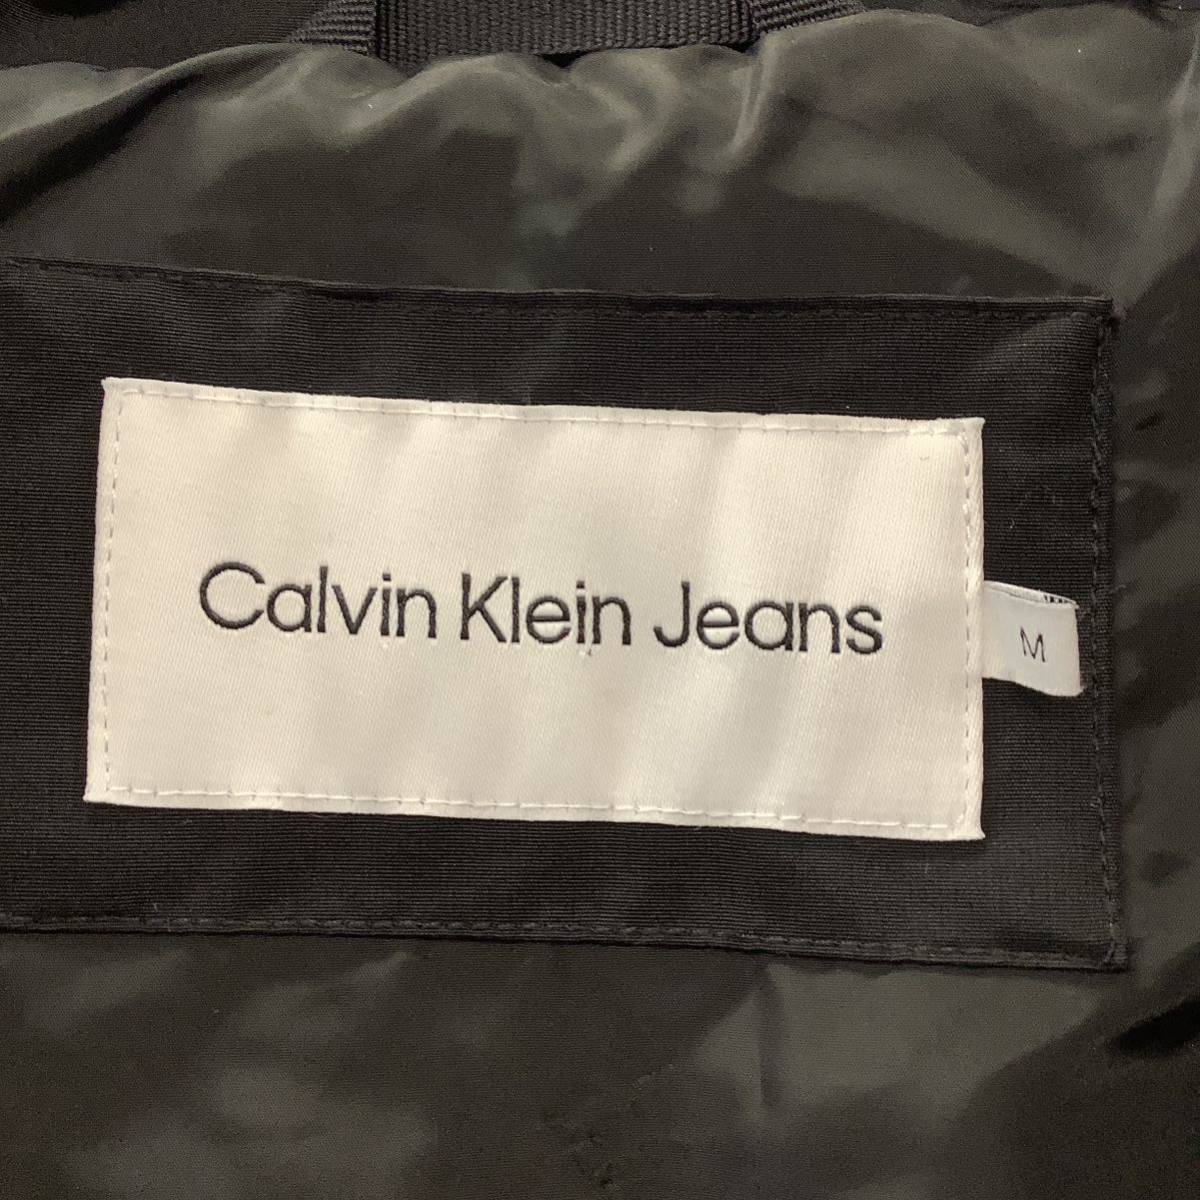 Calvin Klein Jeans Calvin Klein jeans nylon jacket blouson black size M 77392